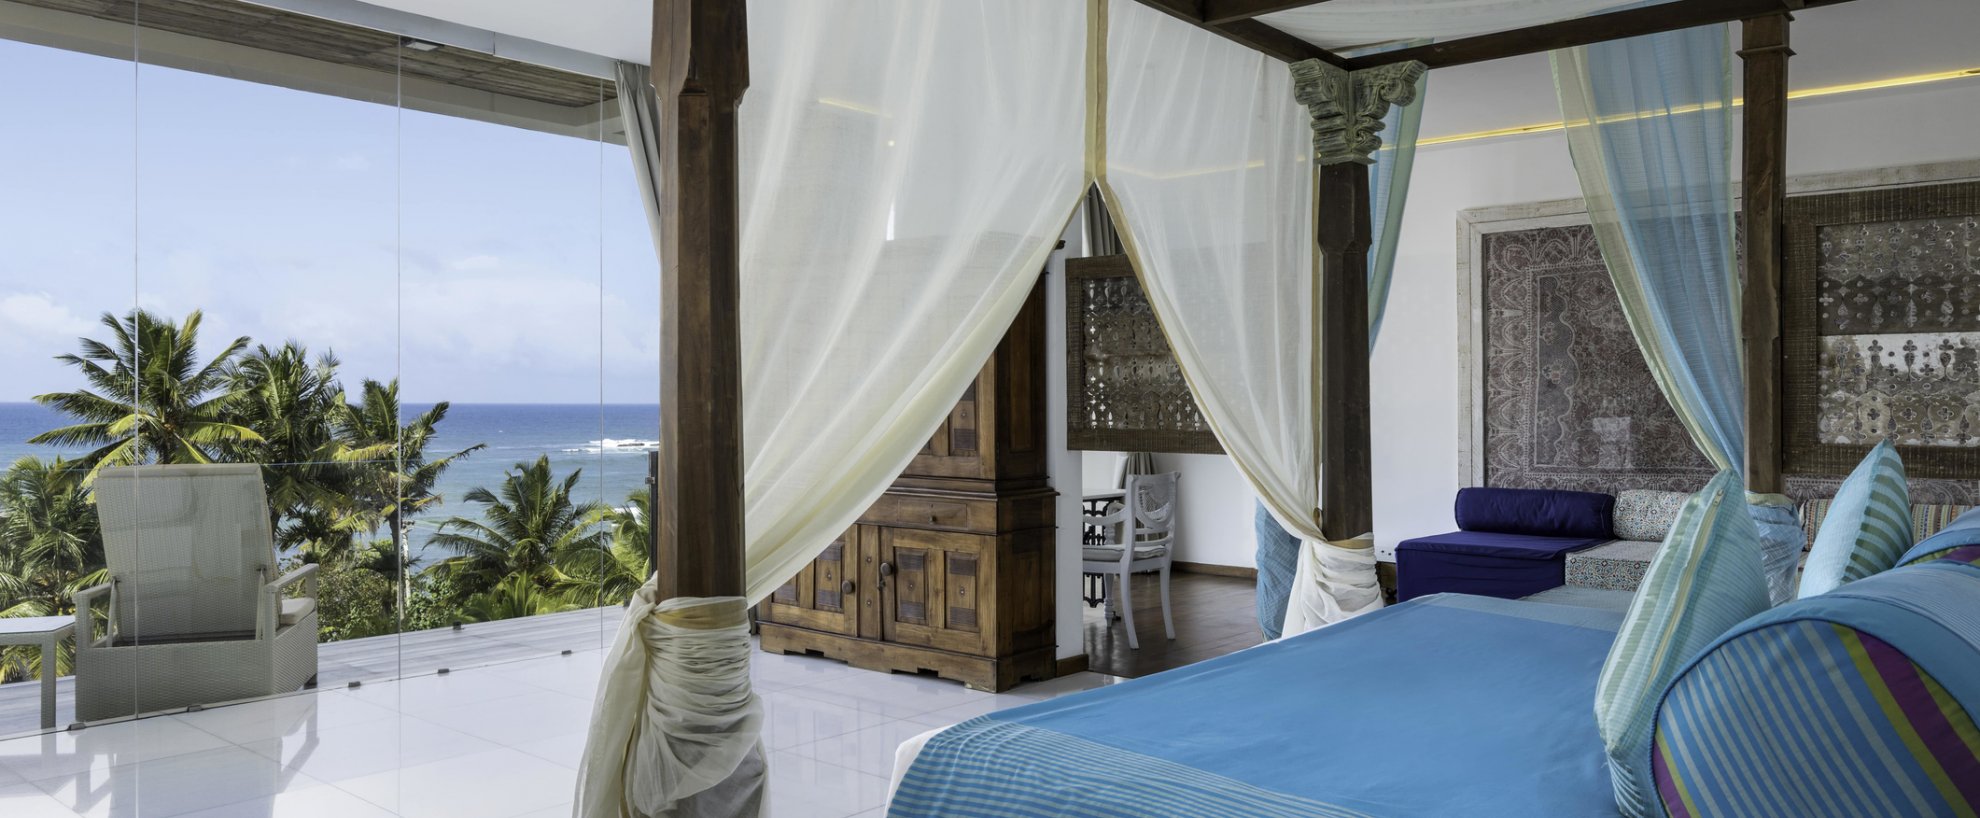 Sri Lanka Ayurvie Weligama Zimmer Master Suite Bett Himmelbett Aussicht Ausblick Balkon Meer